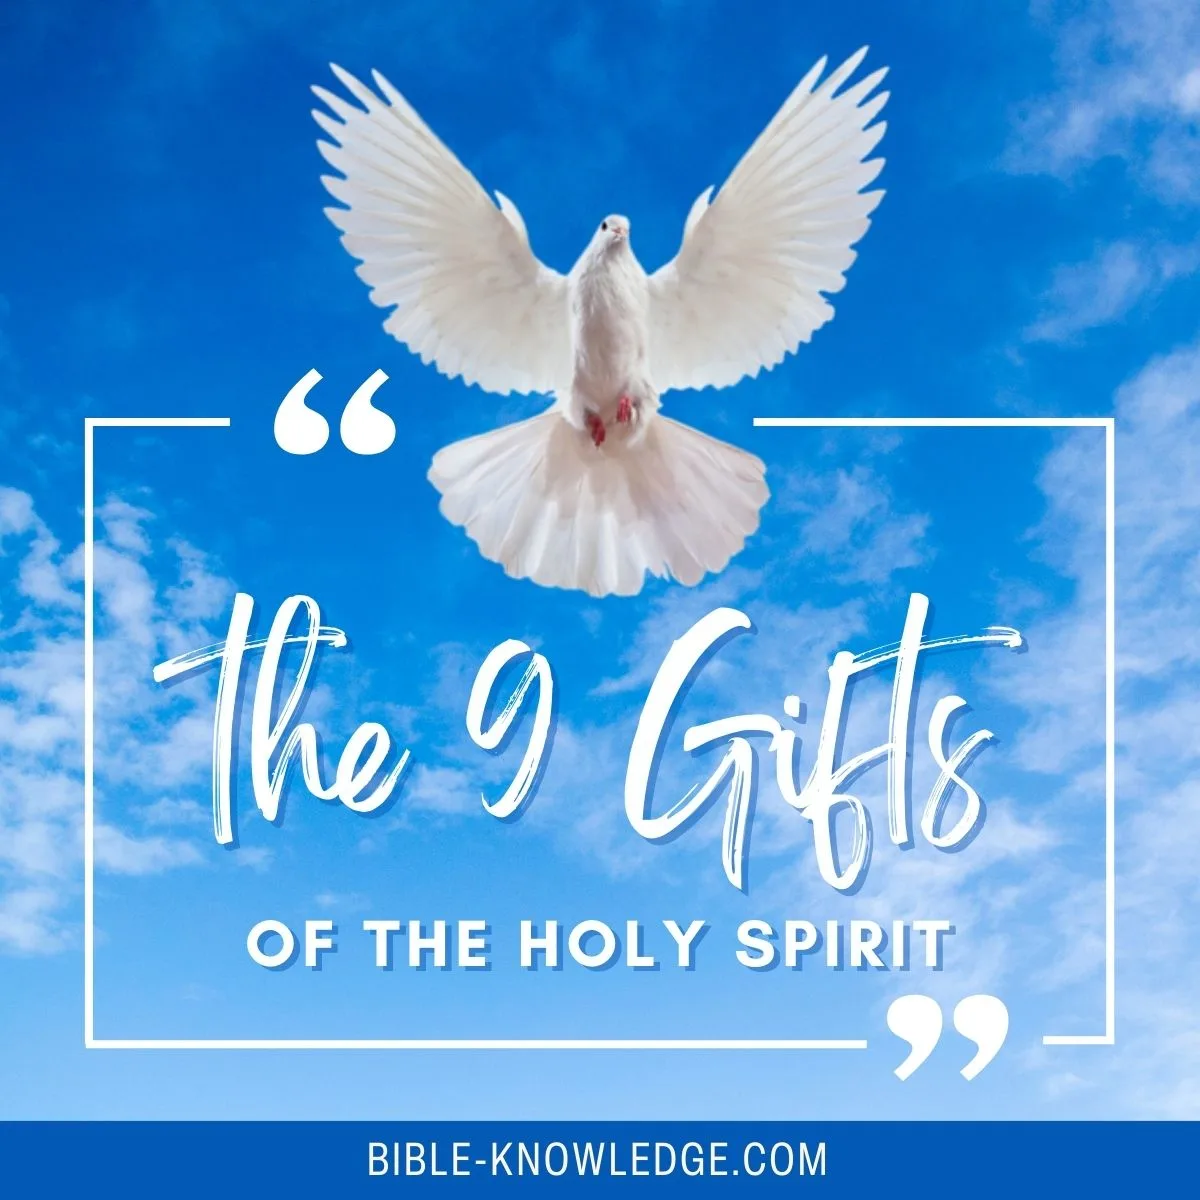 God's Gift of Healing…